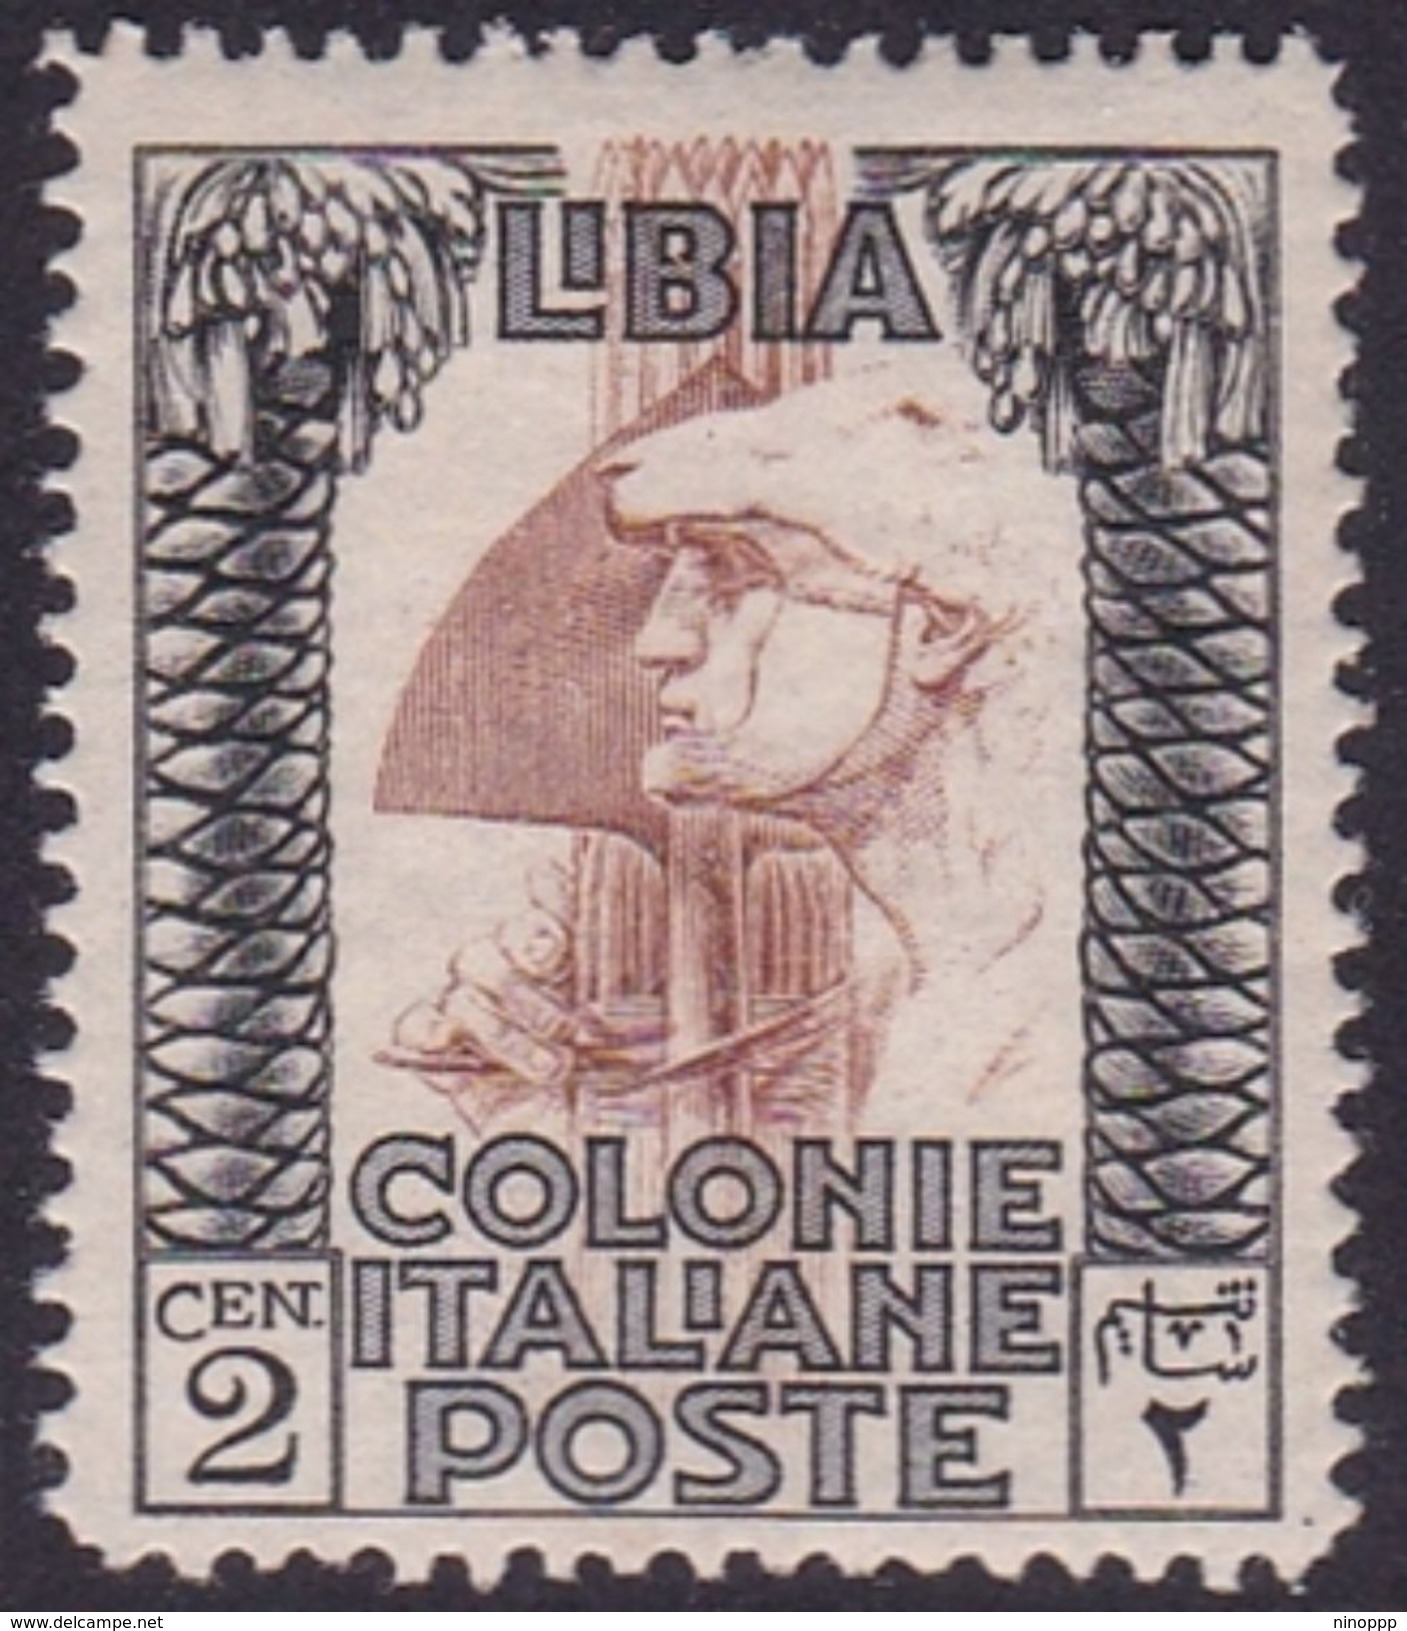 Italy-Colonies And Territories-Libya S 45 1924-29 ,Pictorials,2c Roman Legionary,Mint Never Hinged - Libya